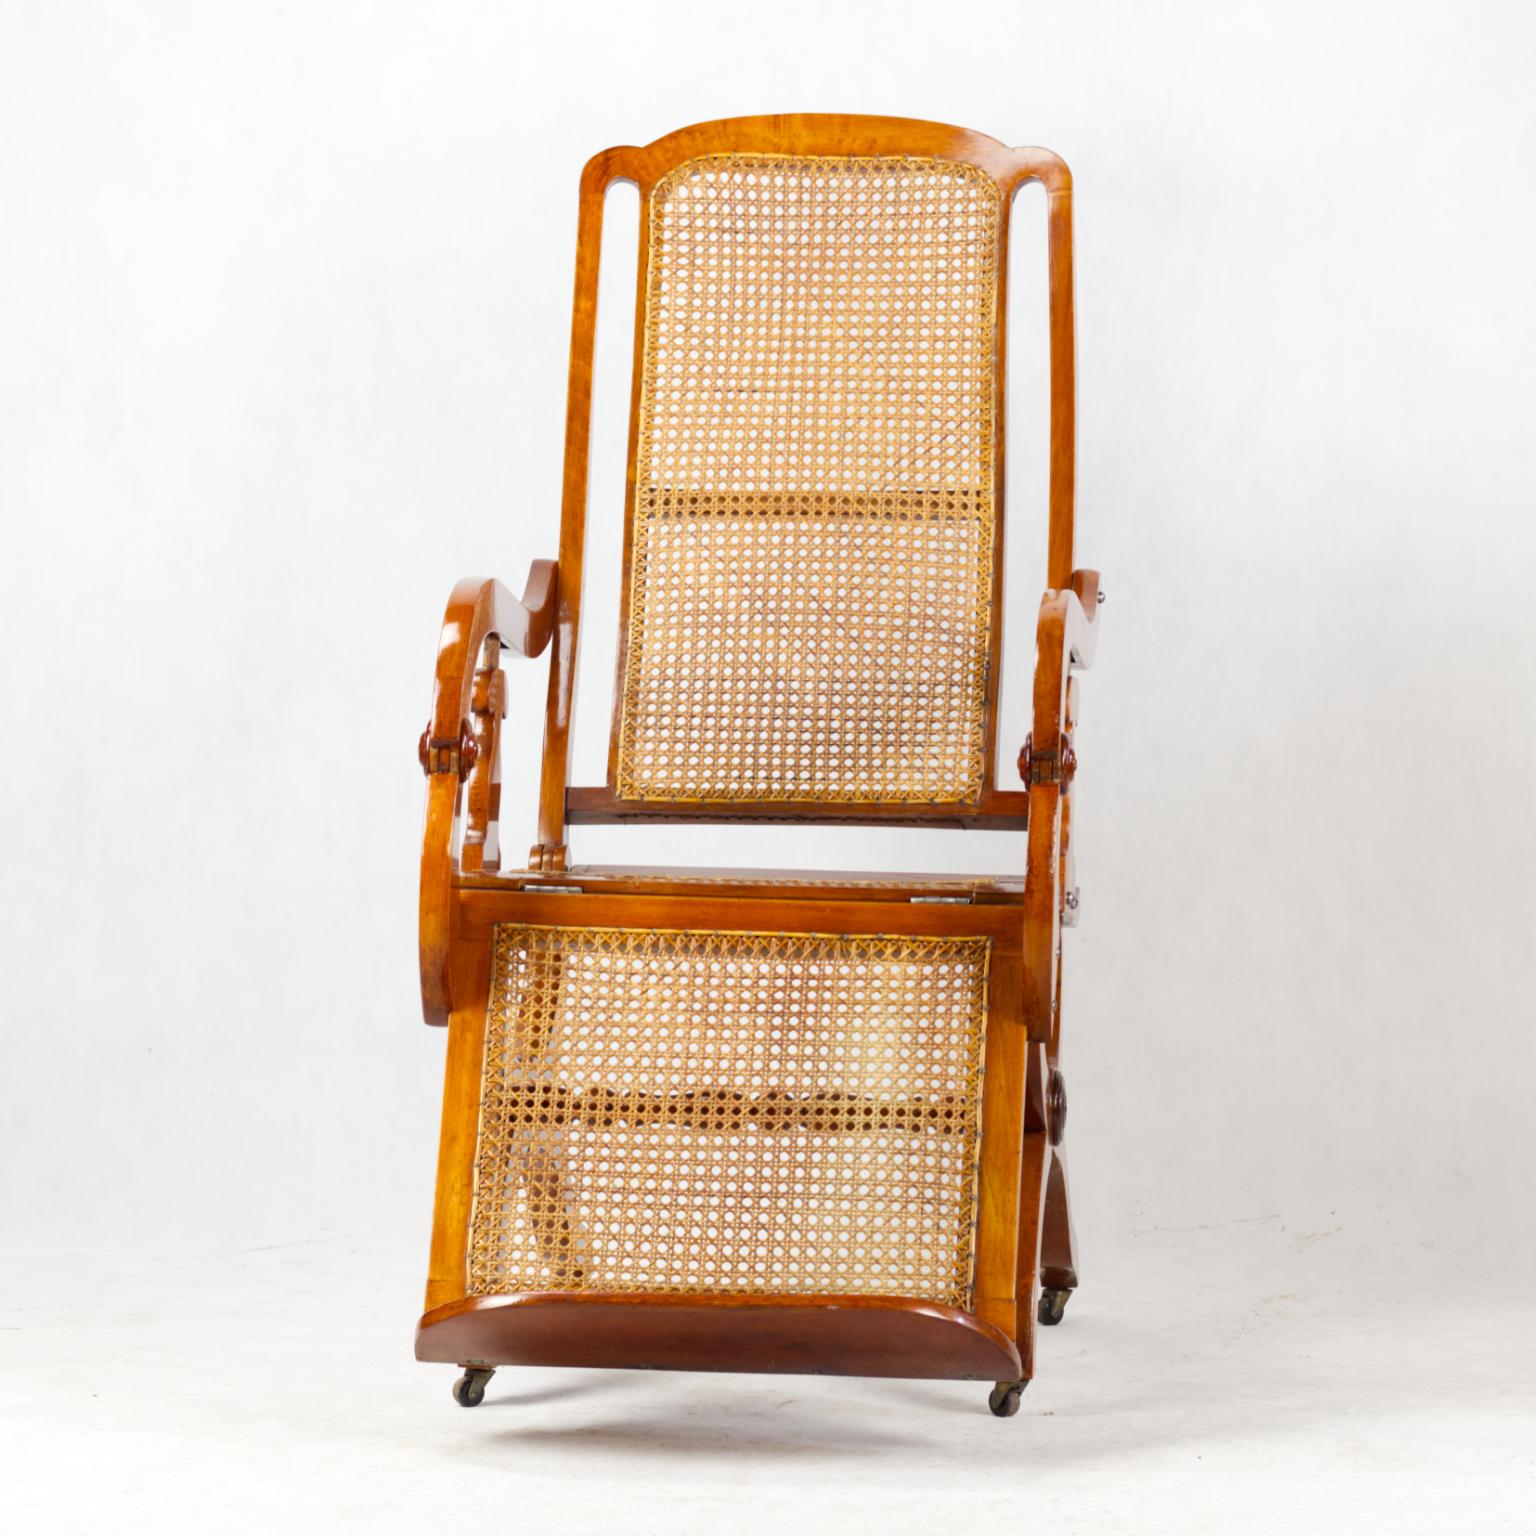 Large Biedermeier reclining chair, late 19th century.
Fully restored.